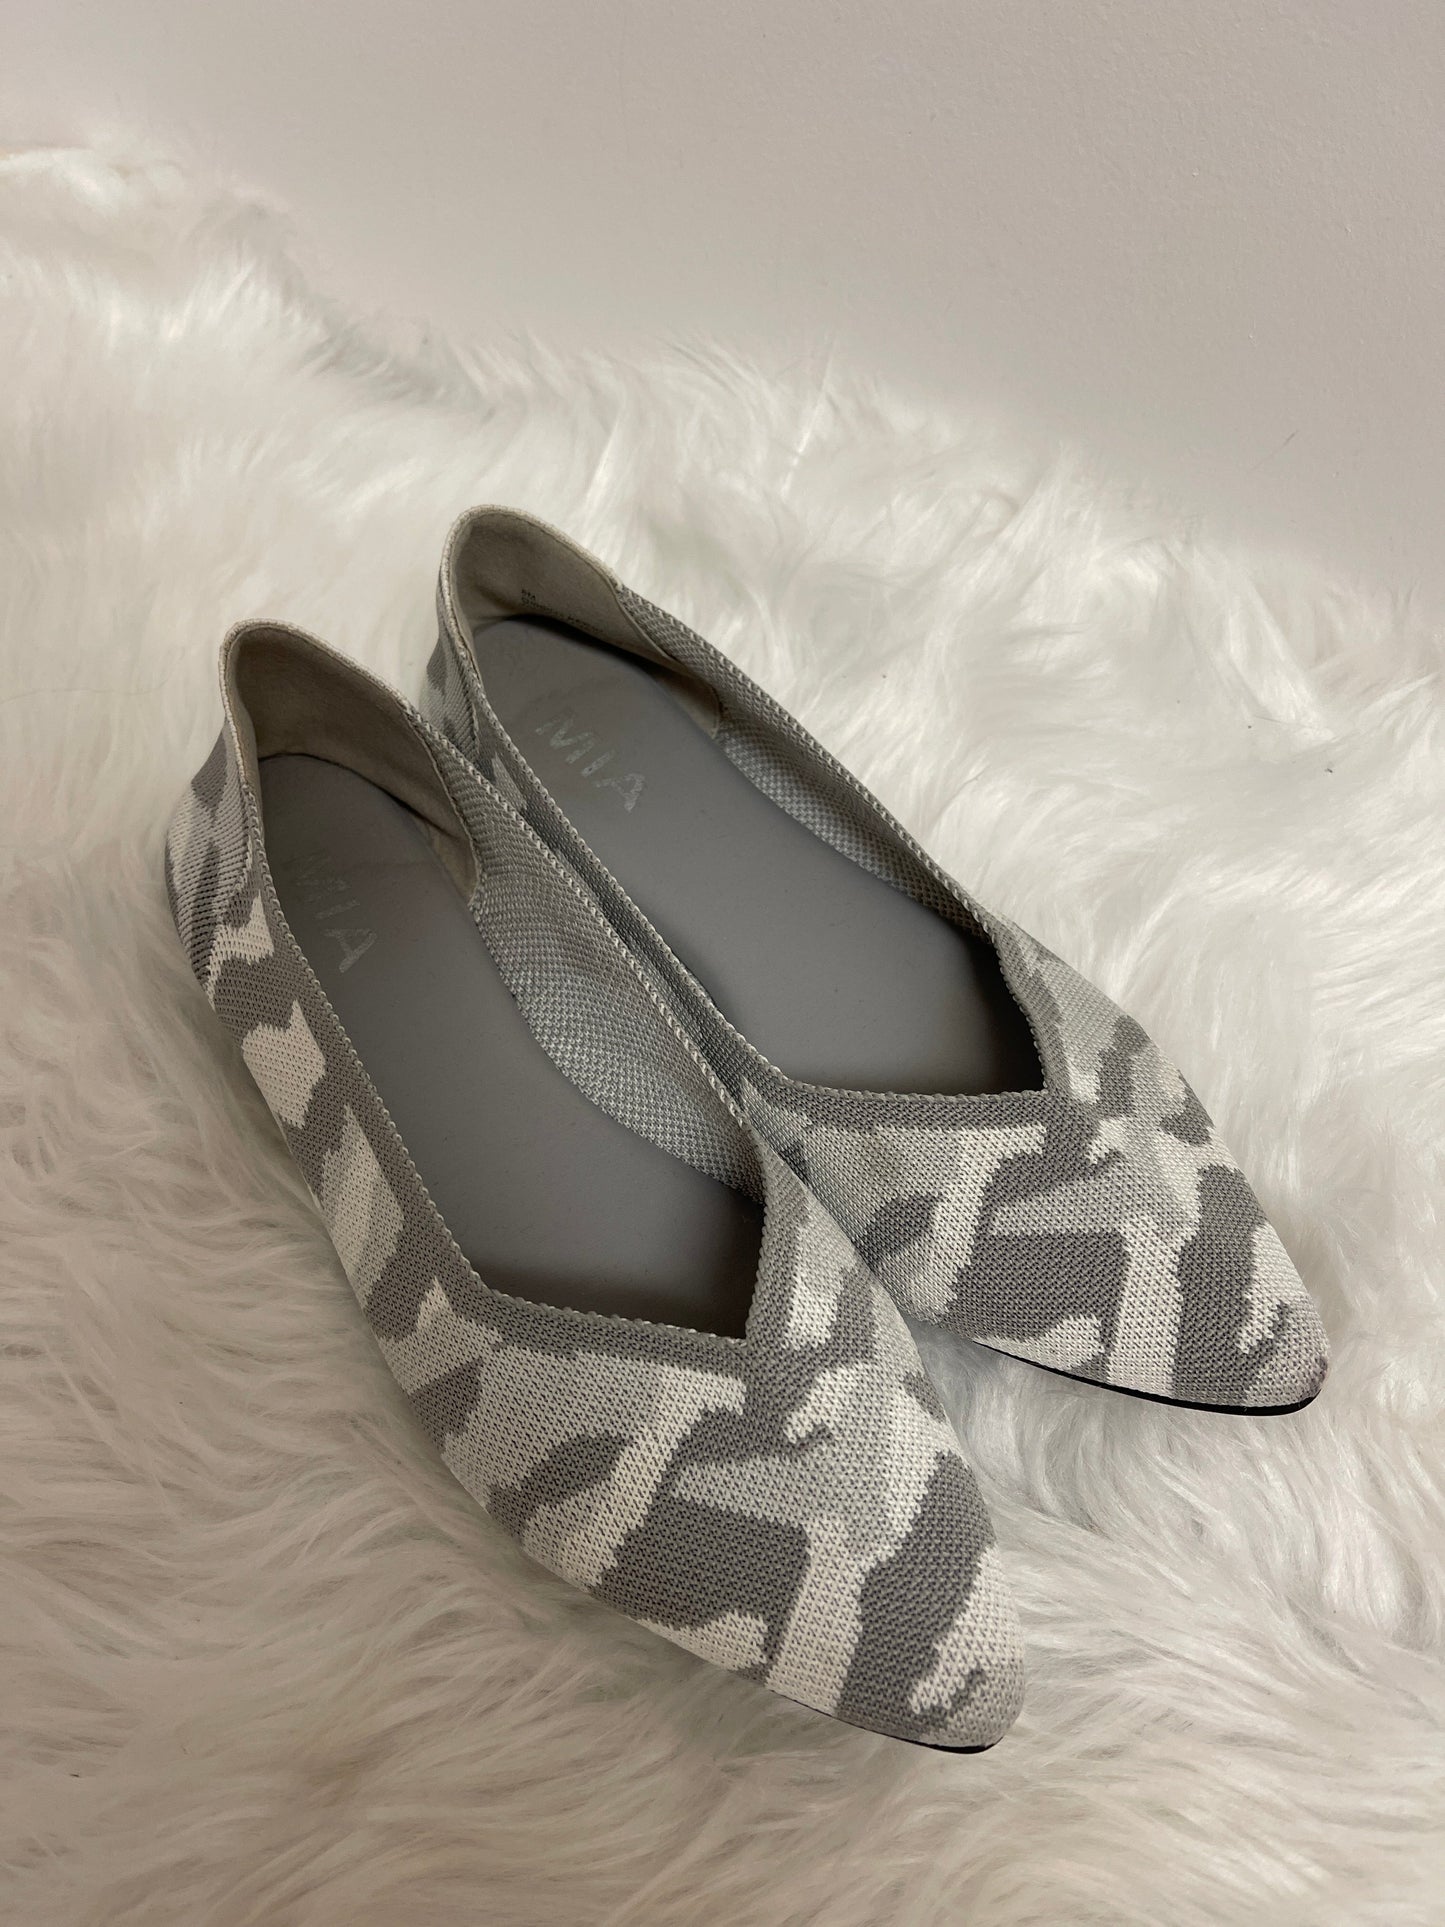 Grey Shoes Flats Mia, Size 8